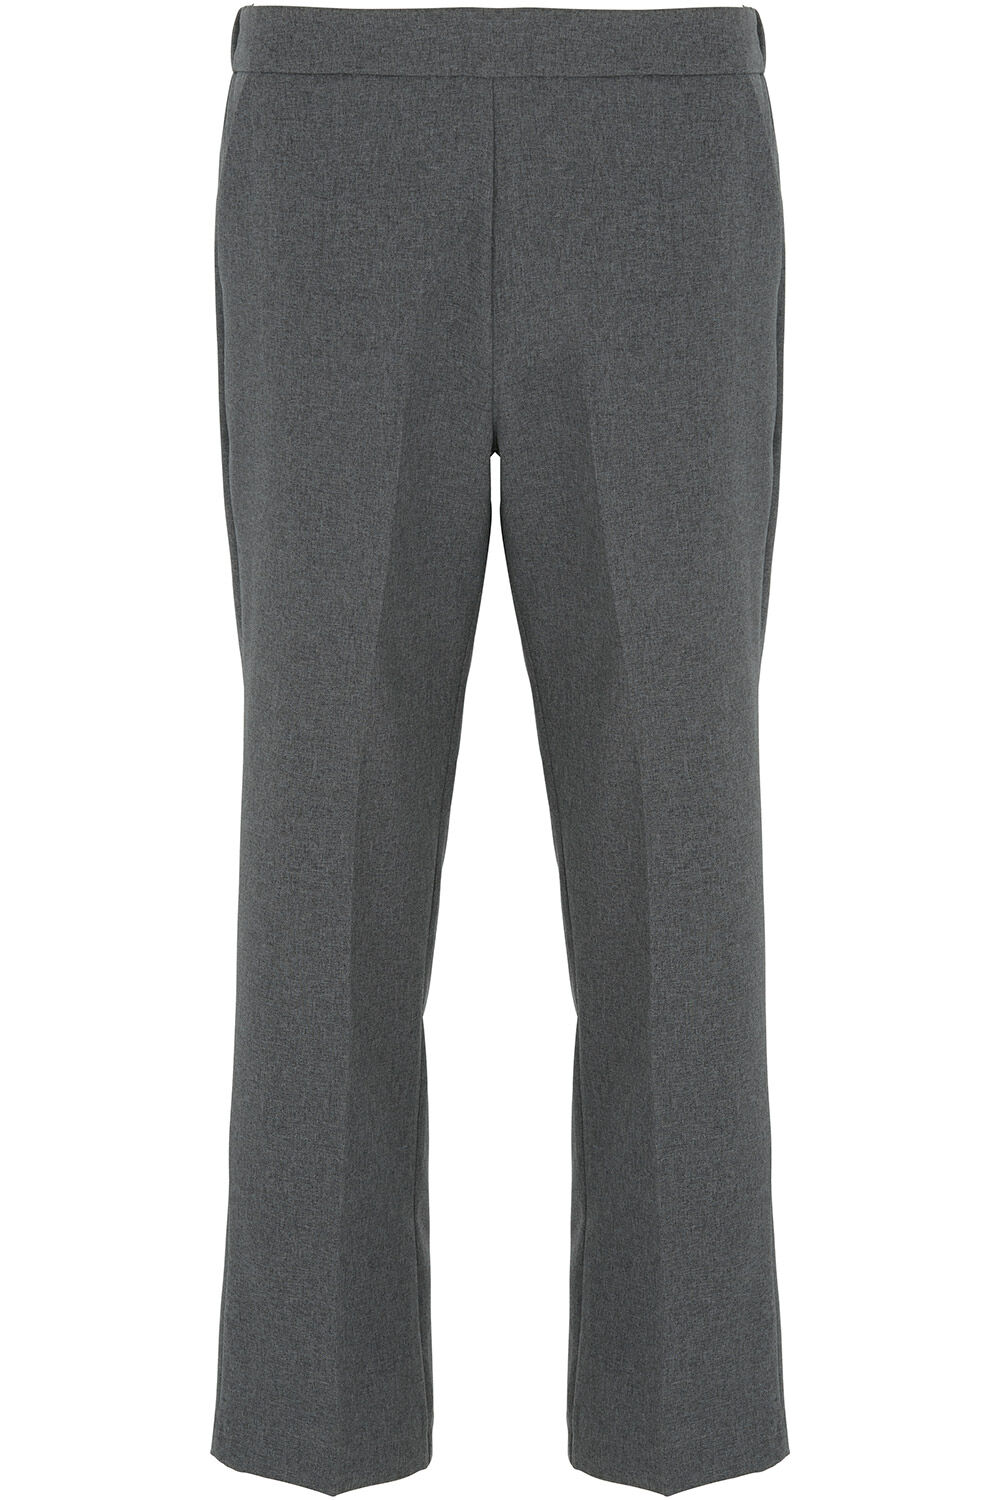 Bonmarche Plain Straight Leg Pull On Trousers - Grey, Size: 12